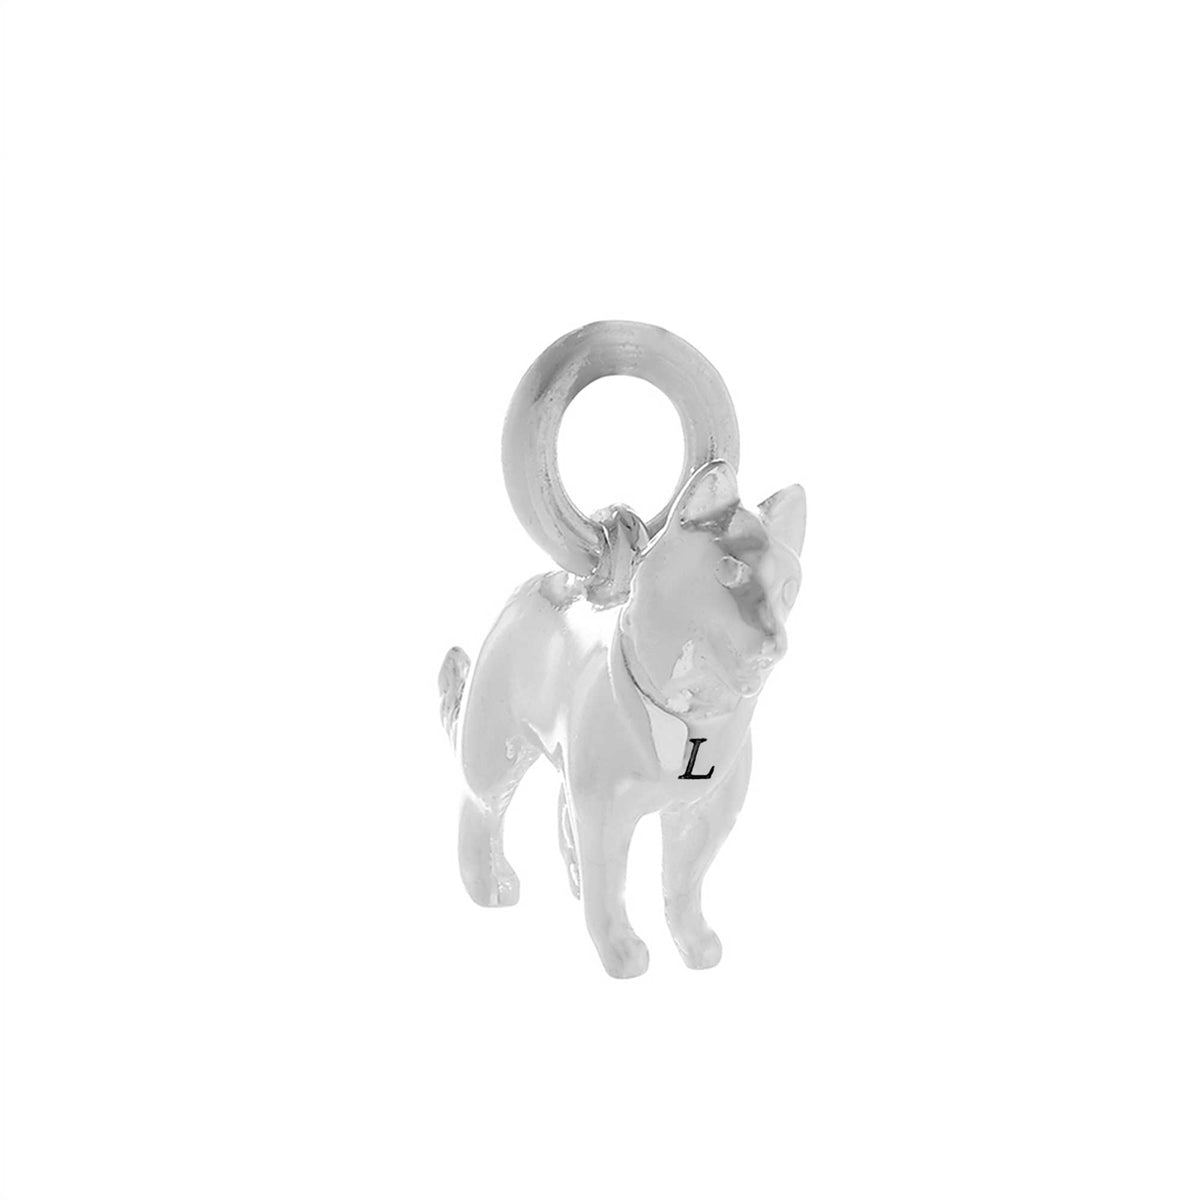 border collie silver dog charm for bracelet pandora links of london style by scarlett jewellery